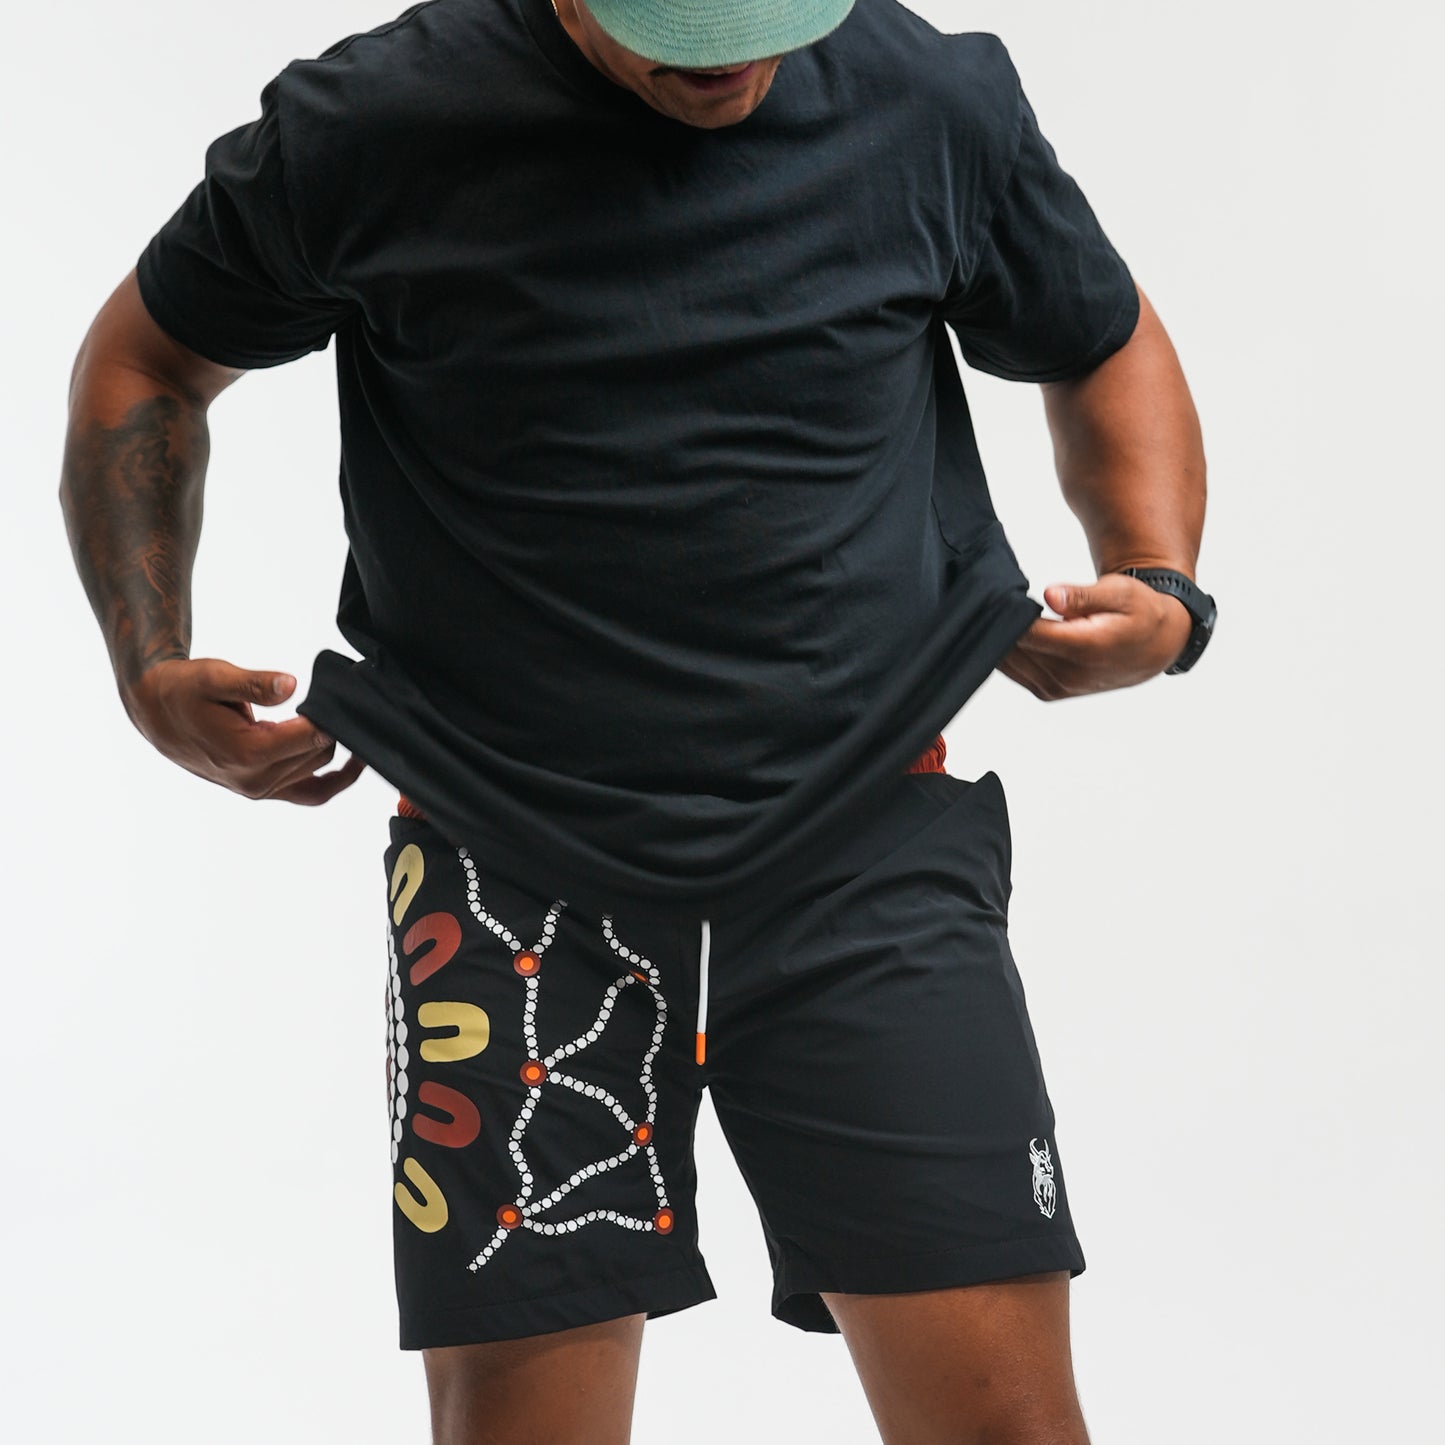 Winmarra Beach Shorts